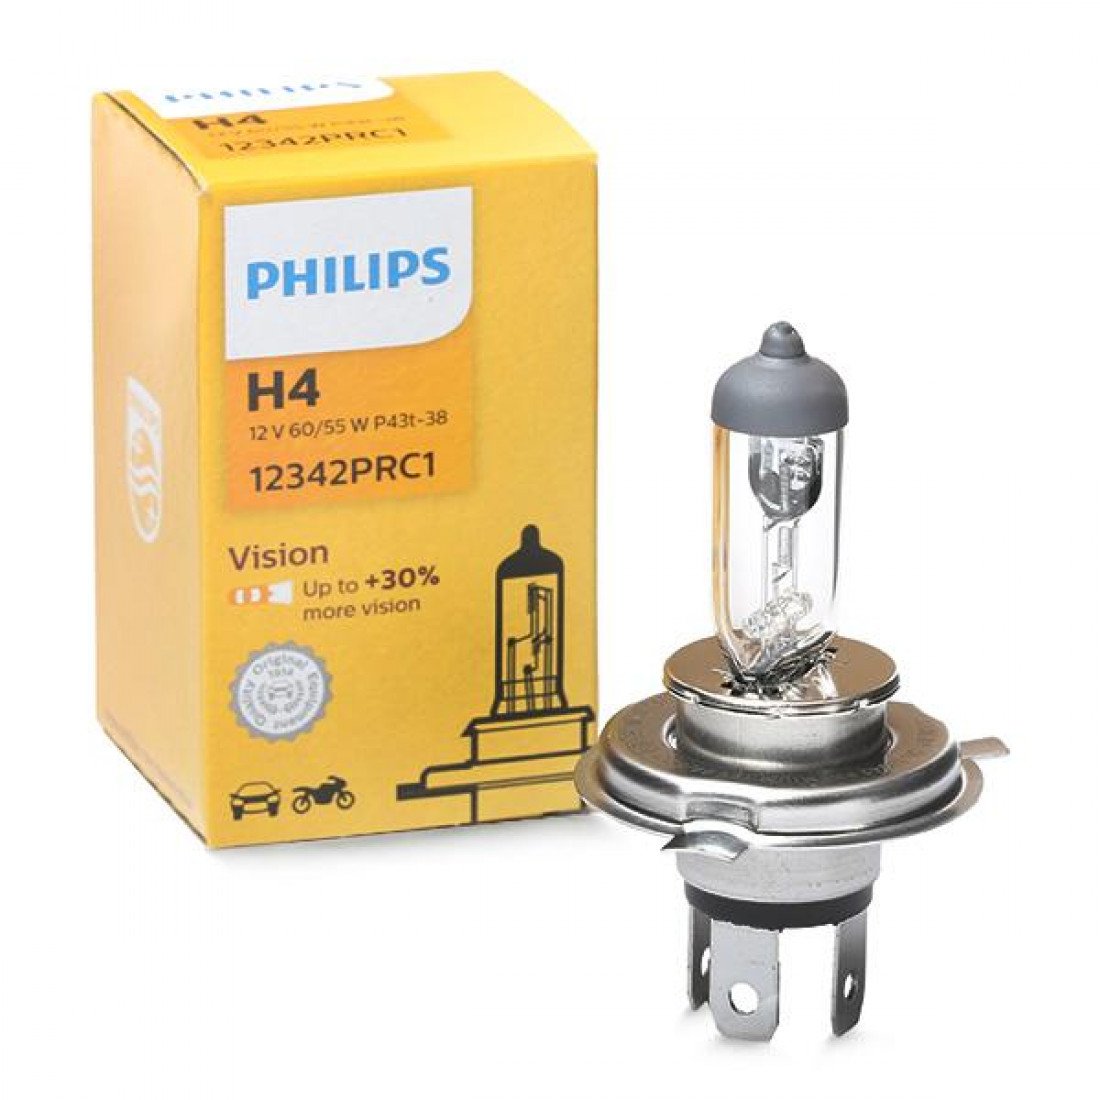 Philips h4 12v 60 55w. Philips Vision +30% 12342prc1 h4 12v 60/55w p43t-38. Philips h4 12342prc1 12v 60/55w. Philips h4 12342prc1. Philips h4 12342 12v 60/55w.